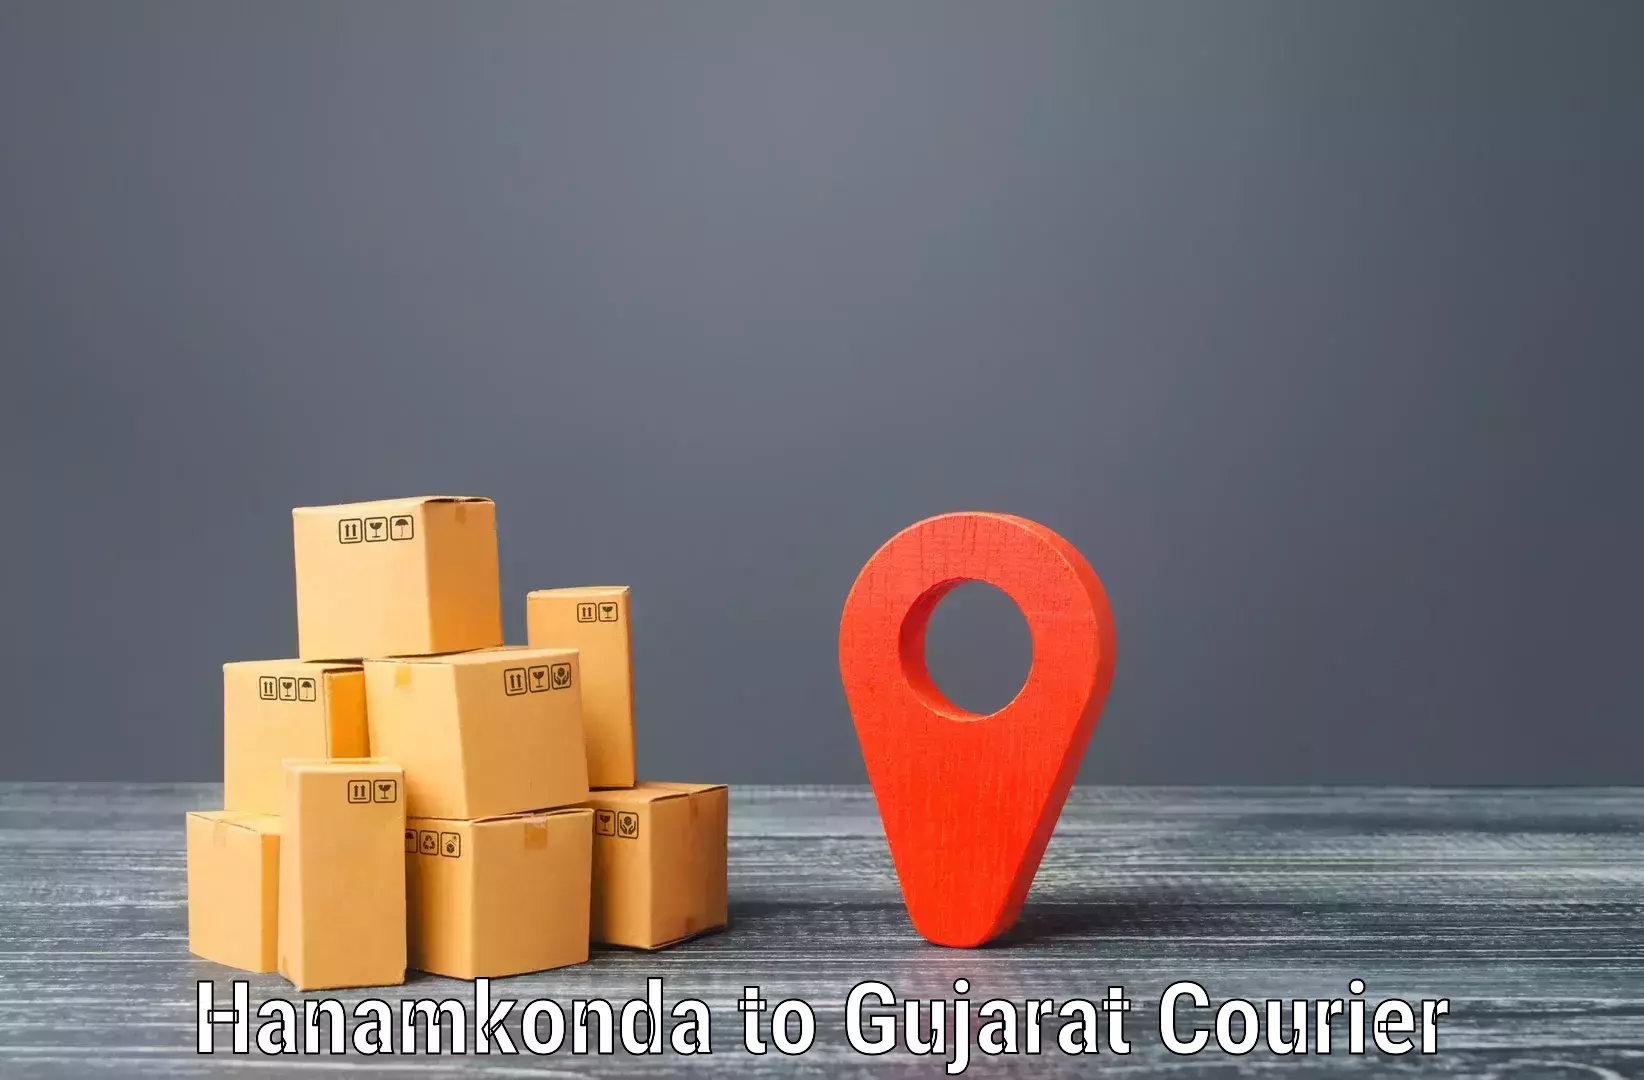 International courier networks Hanamkonda to Vatadara